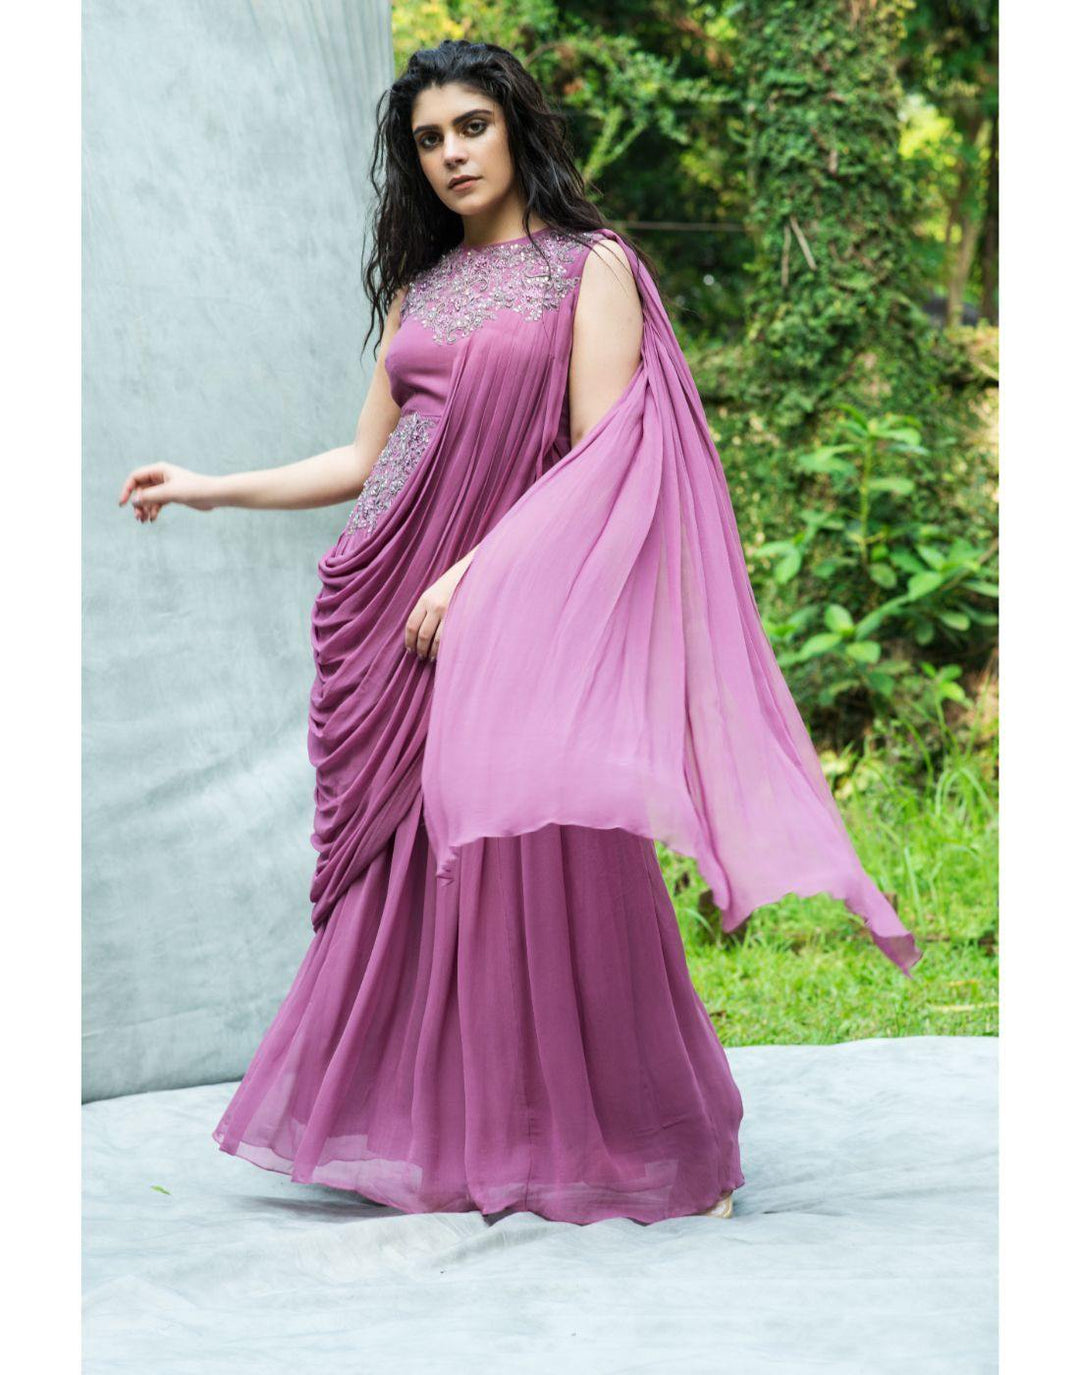 KAIRA's Pink Drape Saree Gown - Clearance